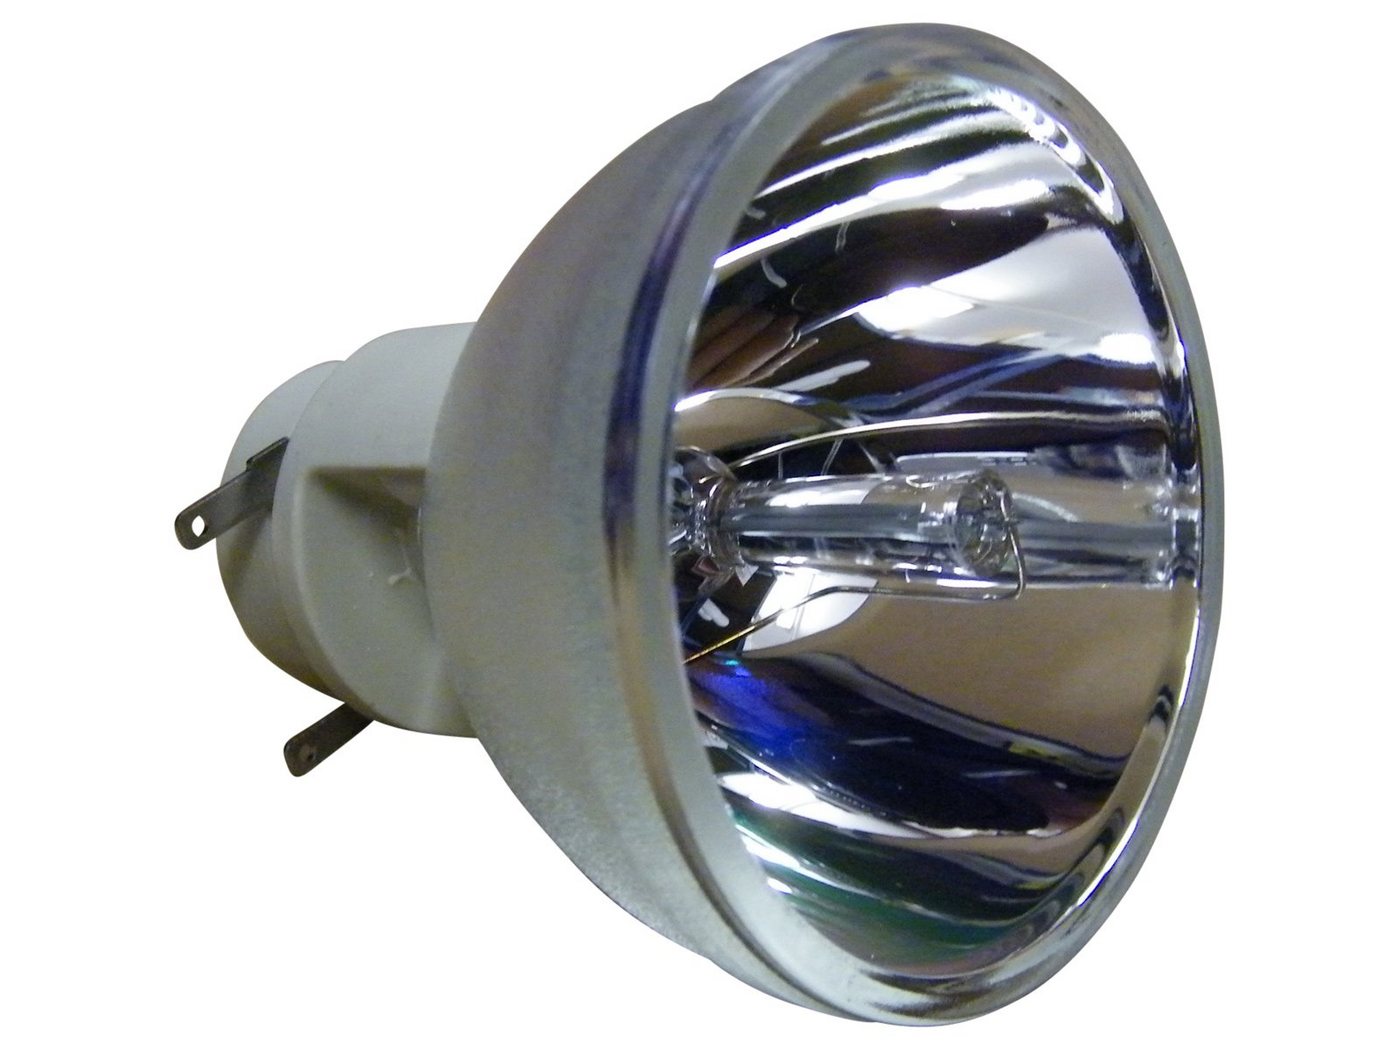 Osram Beamerlampe P-VIP 240/0.8 E20.9N, 240 W, 1-St., Ersatzlampe P-VIP 240/0.8 E20.9N, Beamerlampe für diverse von Osram